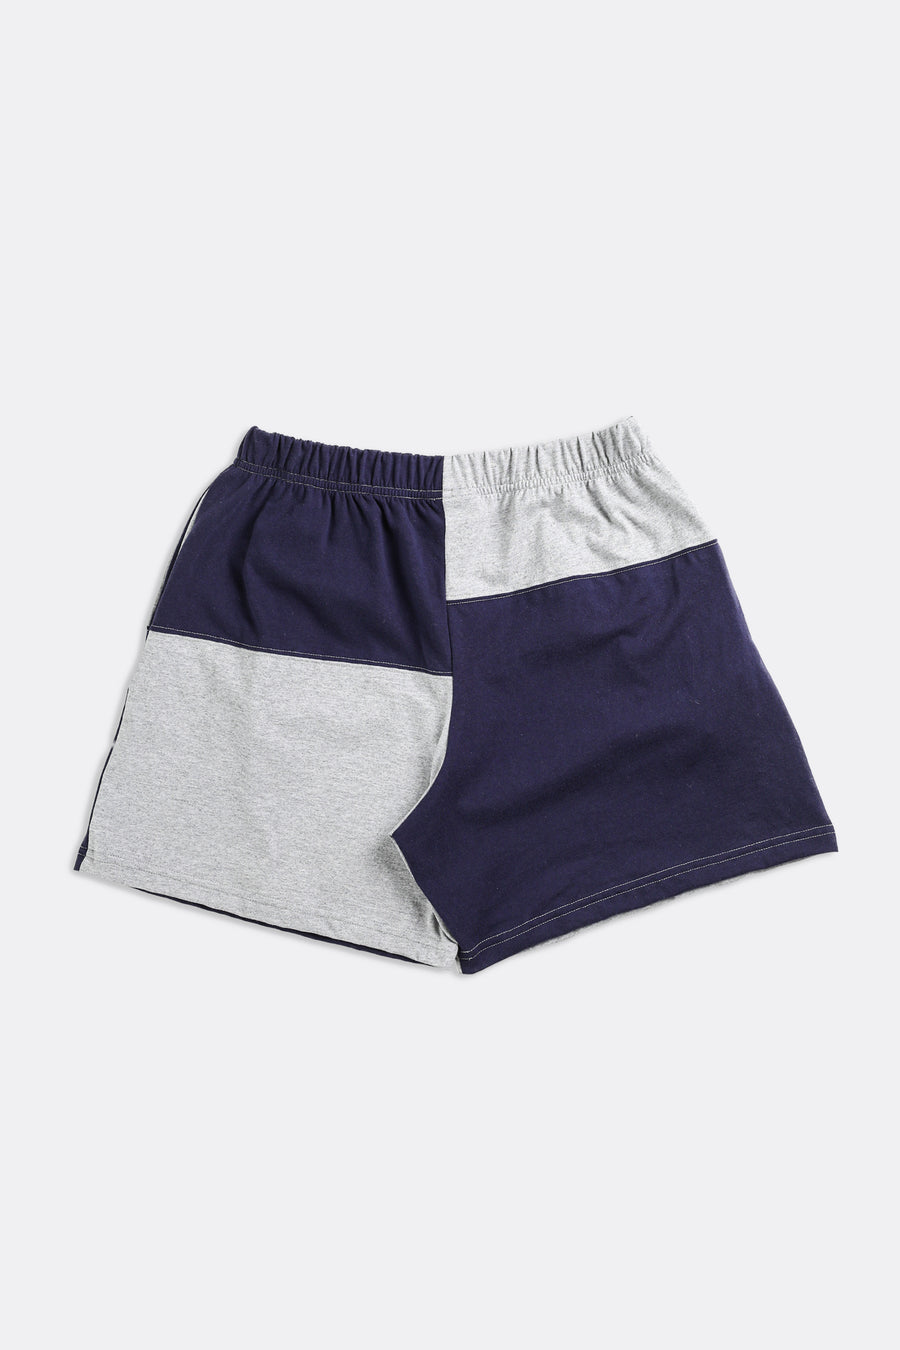 Unisex Rework Patchwork Tee Shorts - Women's M, Men's S